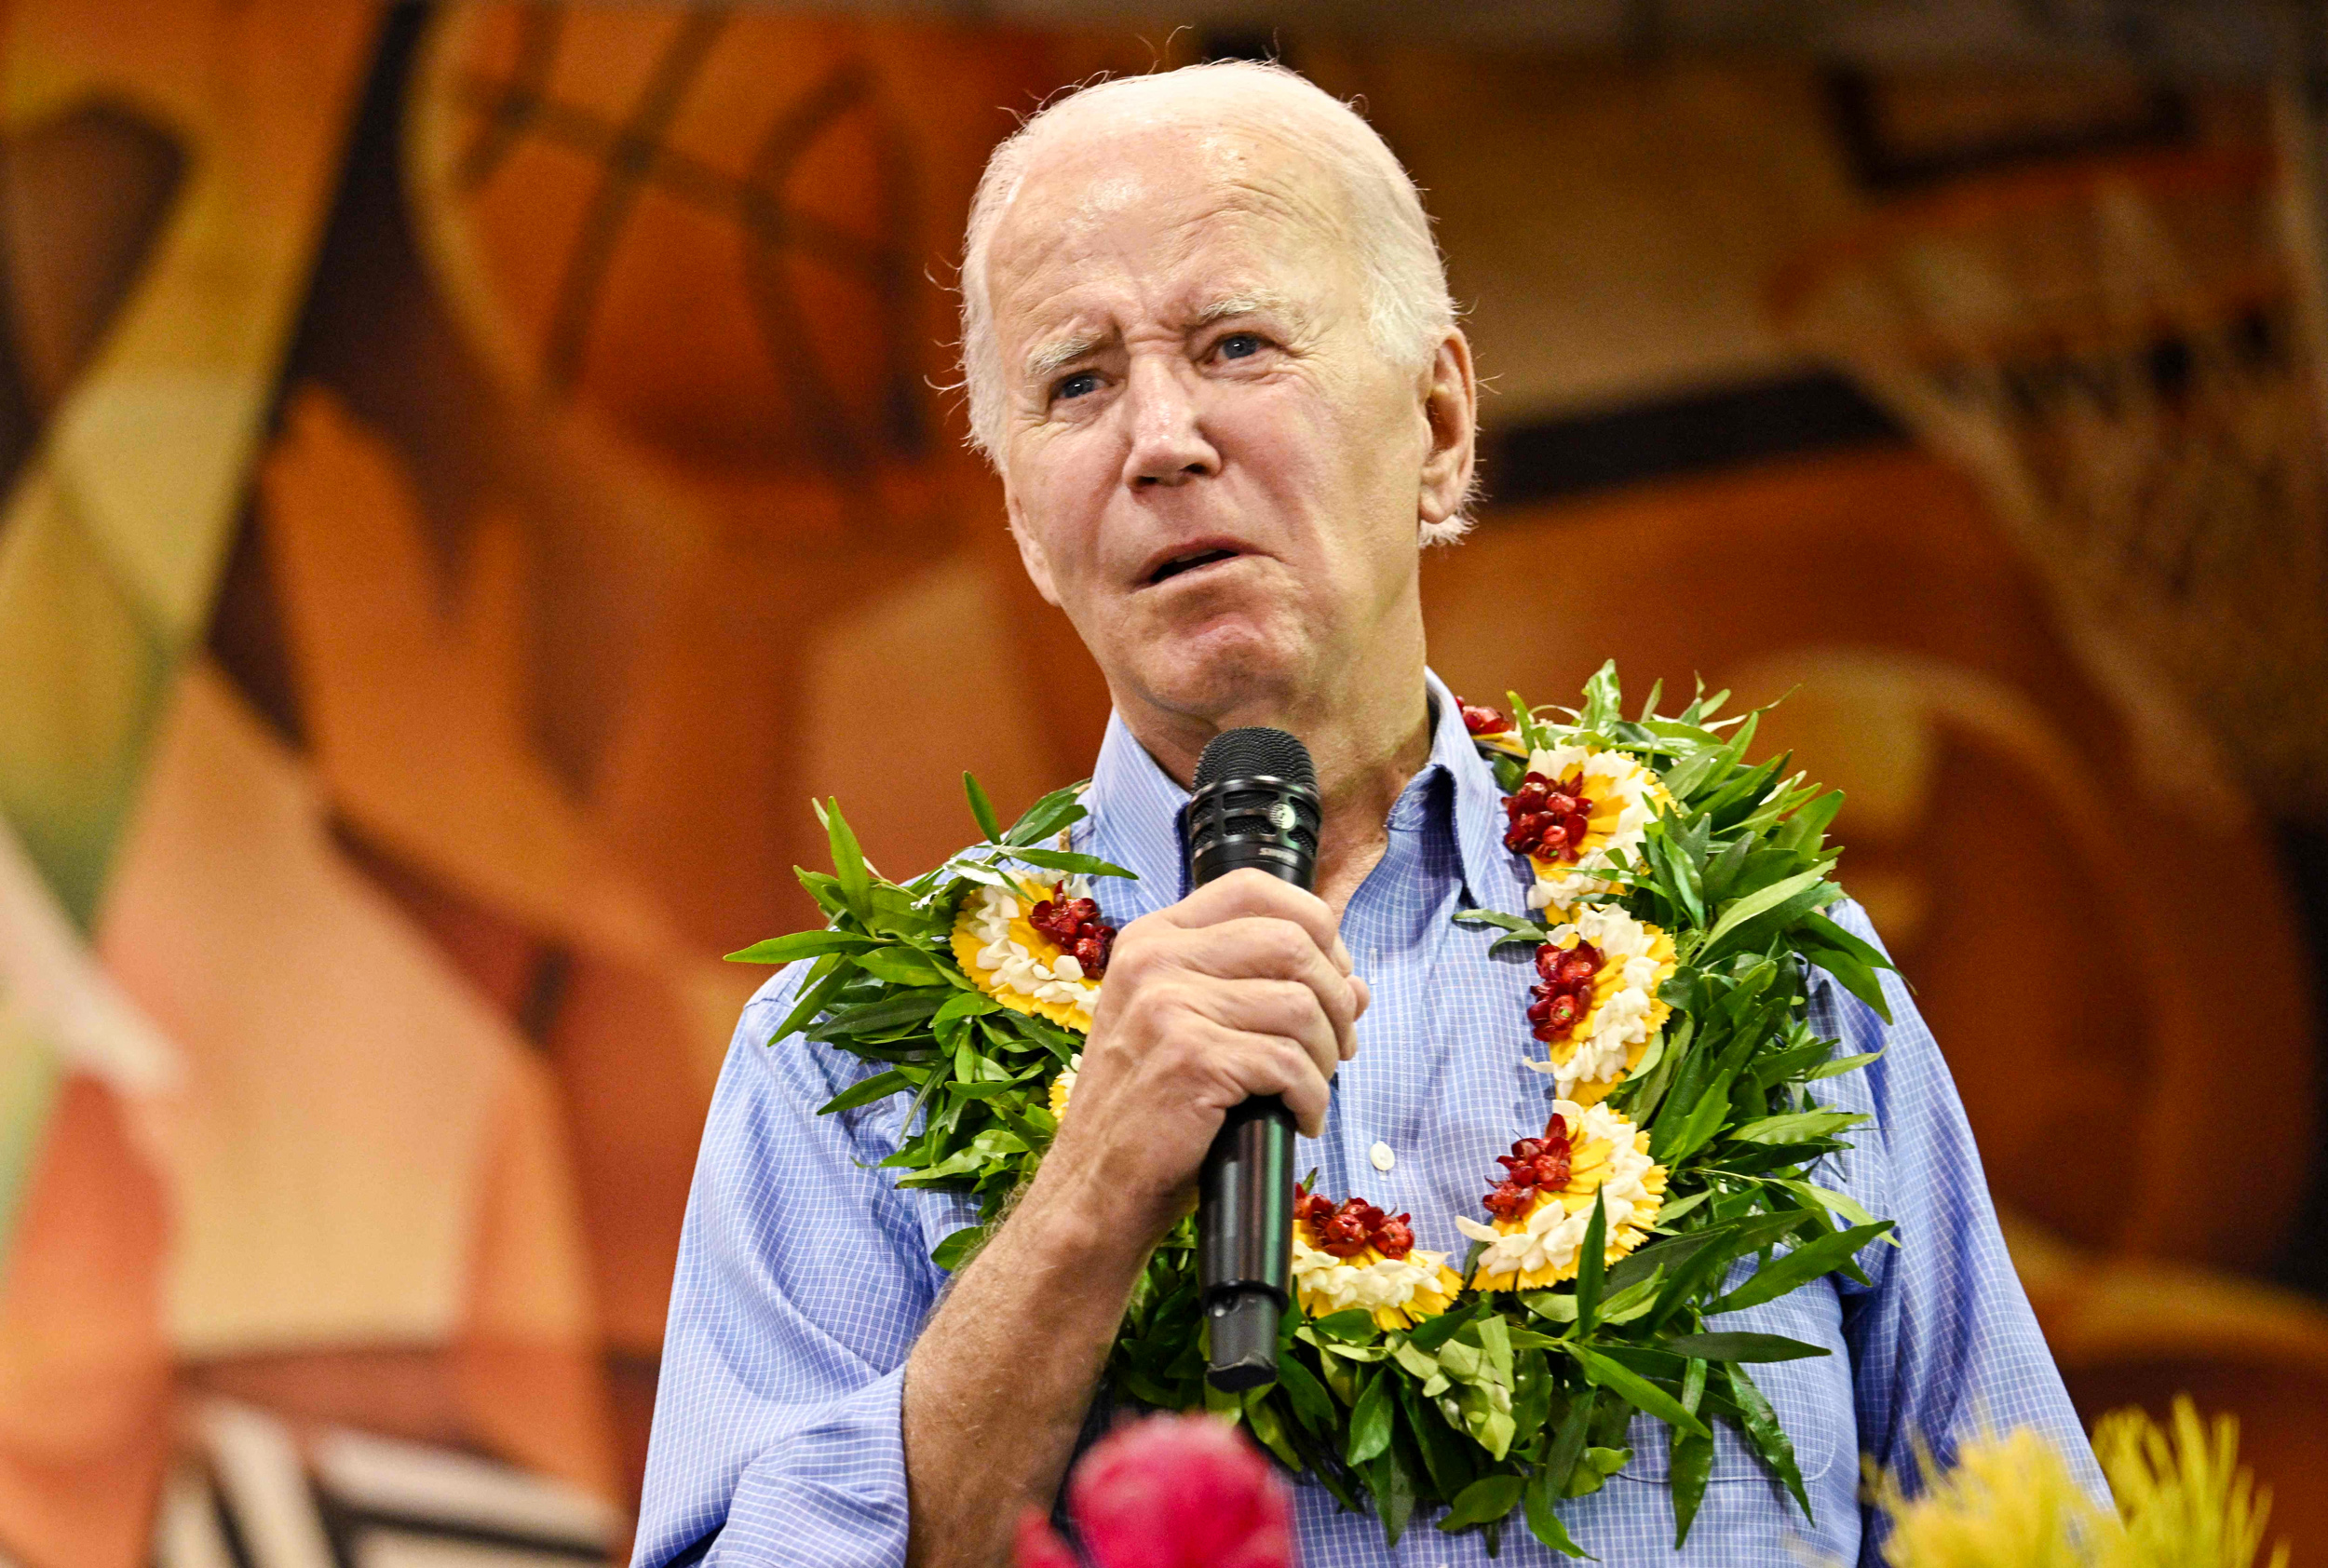 Conservative pundits falsely claim Biden slept during Maui fire memorial